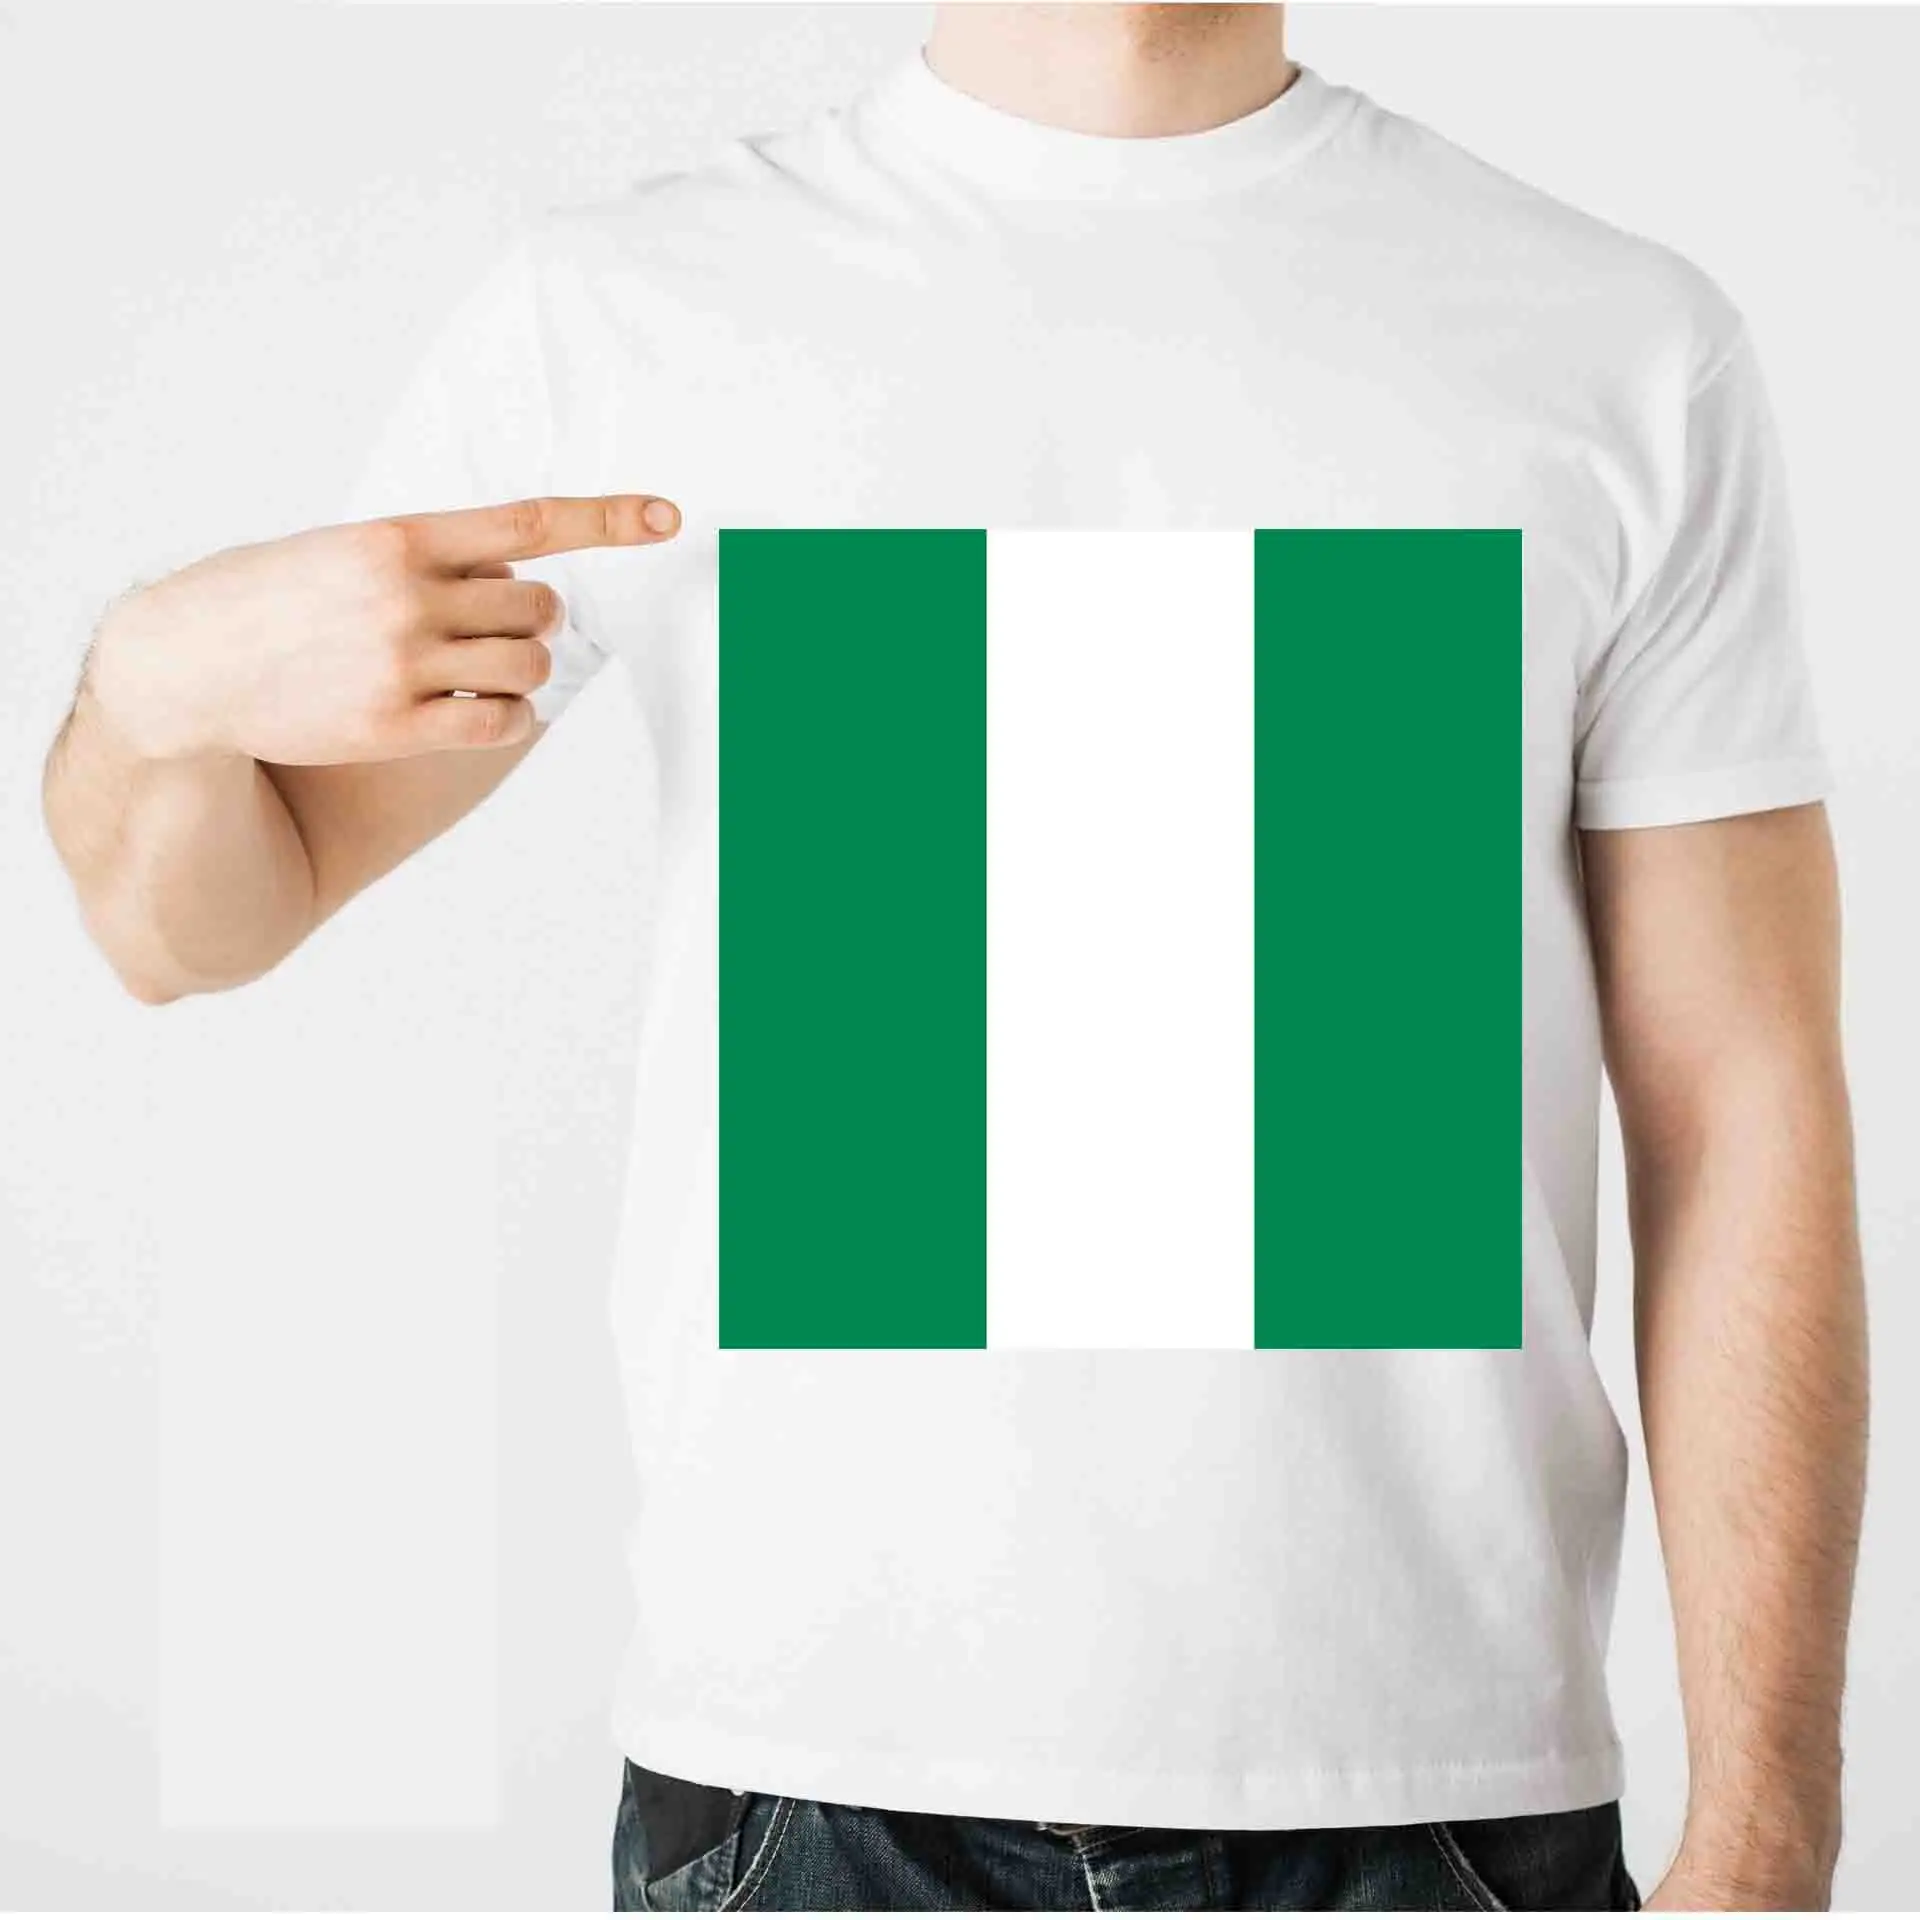 Shipping Agent From China to Nigeria Door to Door Light Weight Custom T Shirt